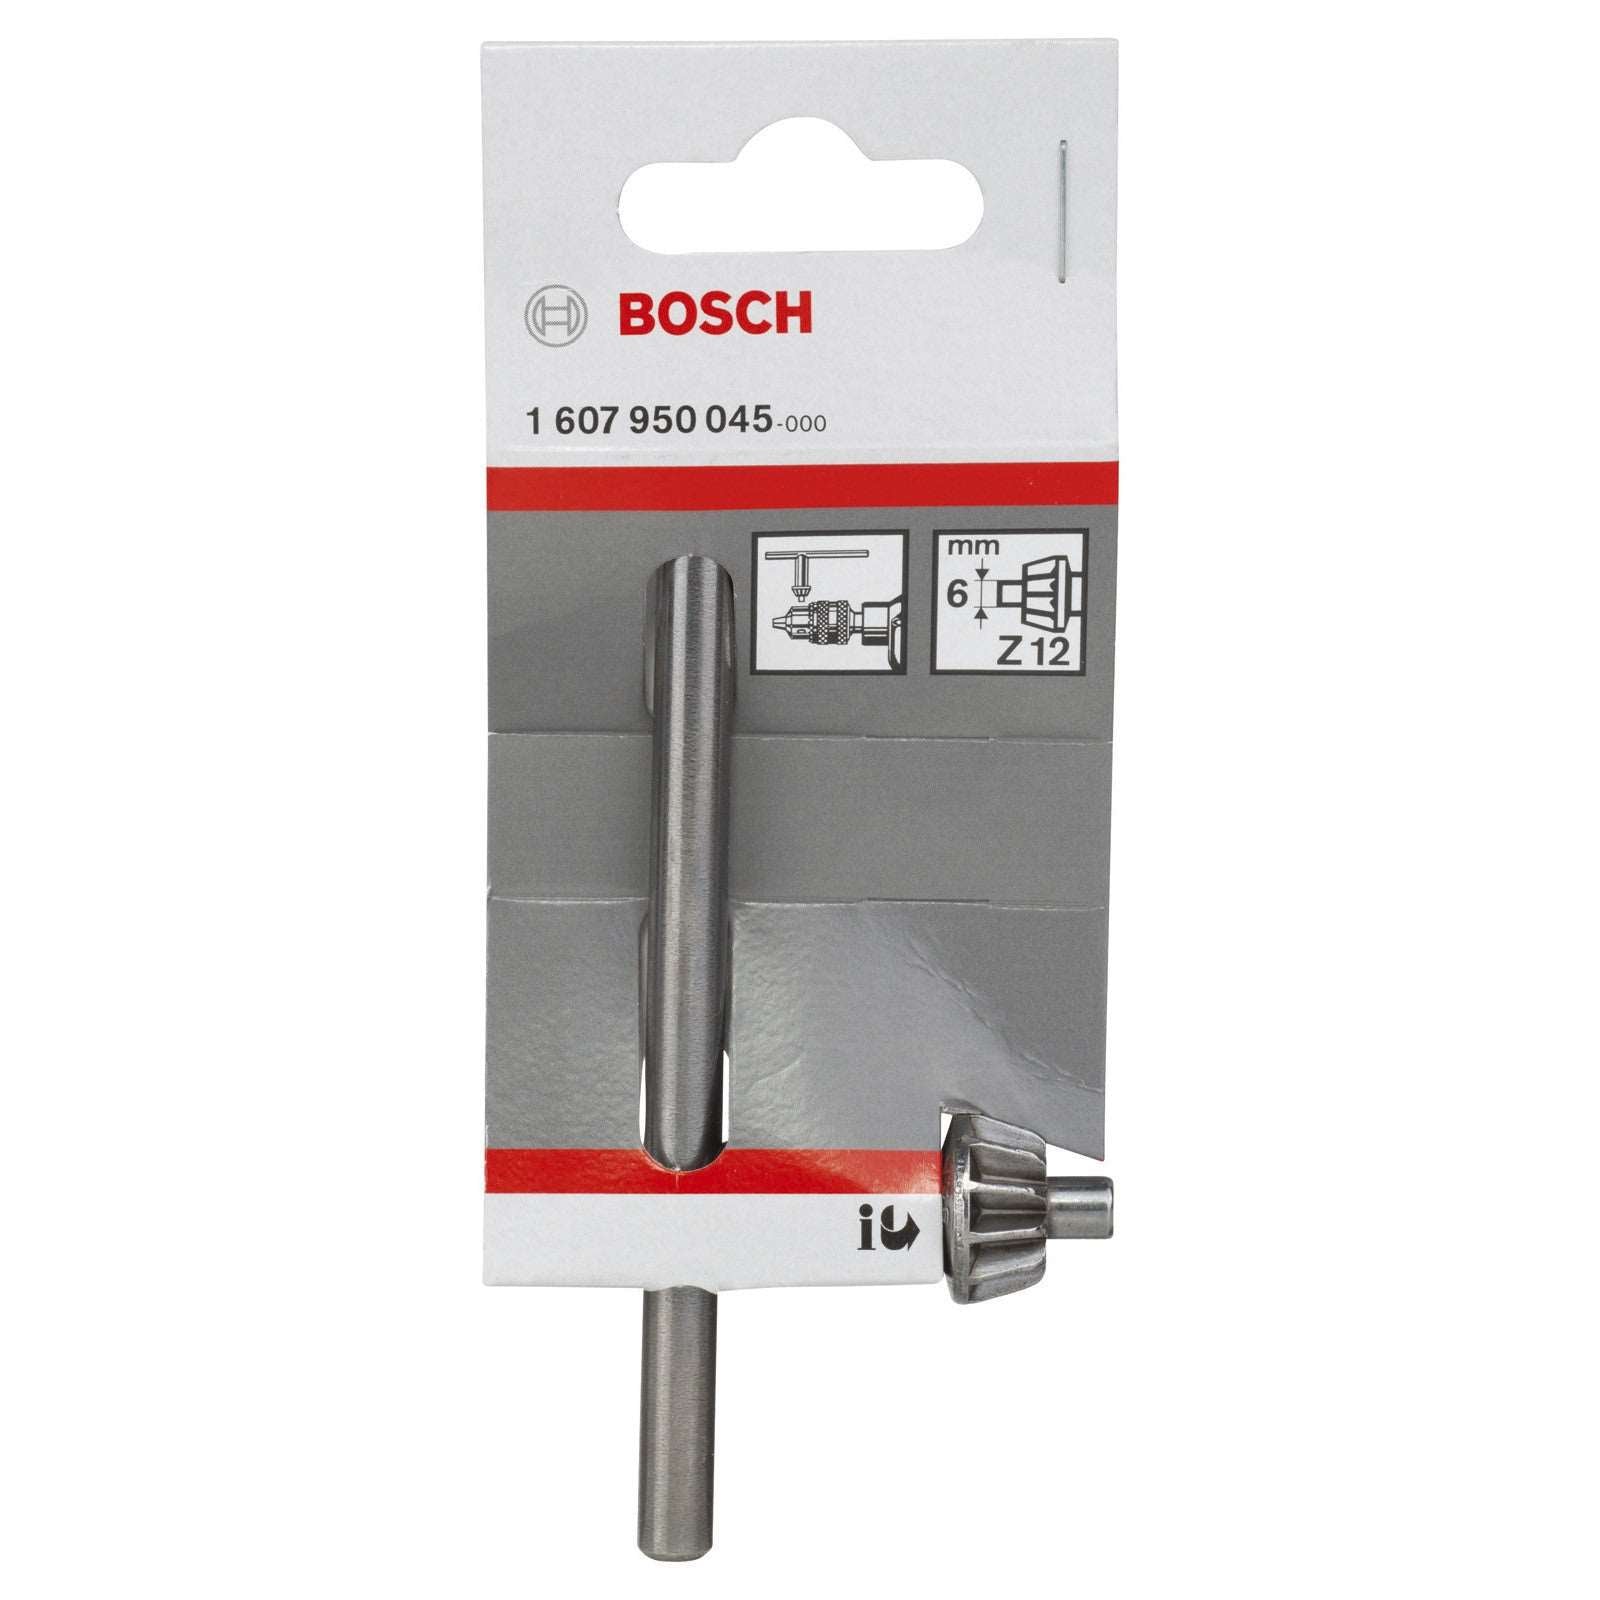 Bosch Chuck Key for chucks S2, D, 110 mm, 40 mm, 6 mm 1607950045 Power Tool Services